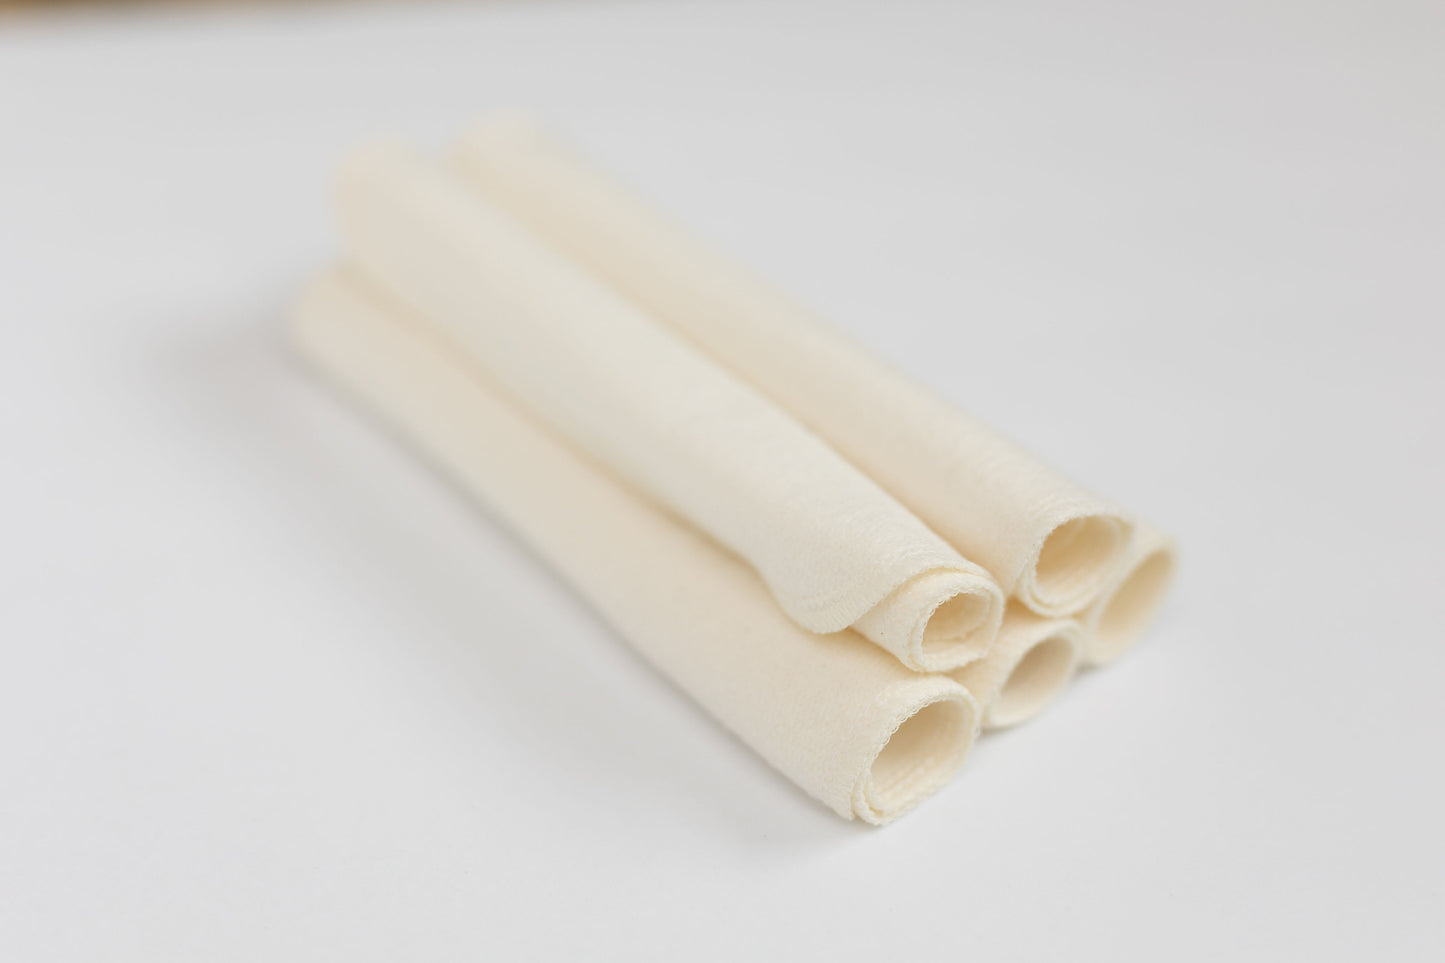 NEW MATERIAL - Bamboo/Organic Cotton Fleece Washcloths - 12 packs of 5